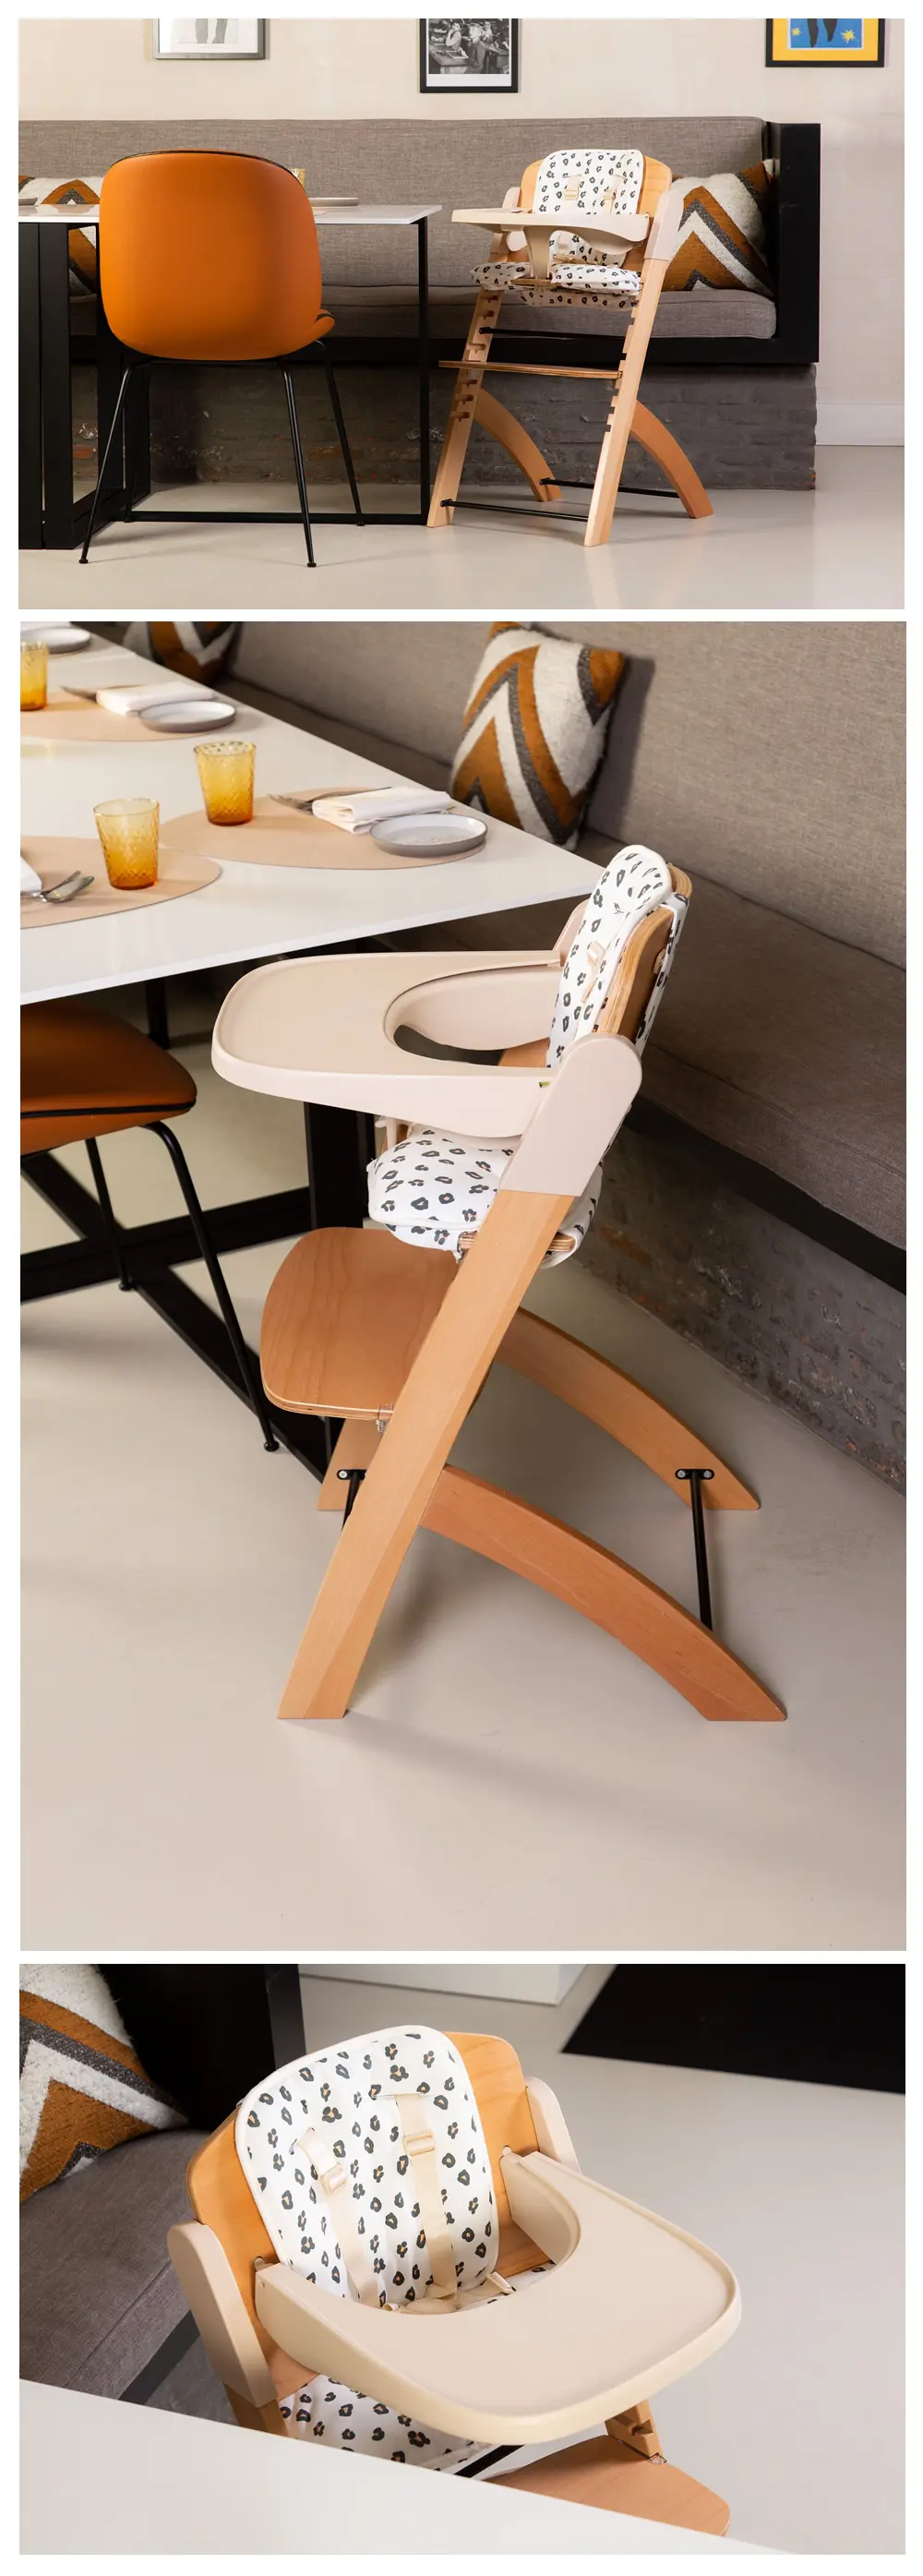 Childhome Evosit 可調式高腳餐椅座墊-豹紋